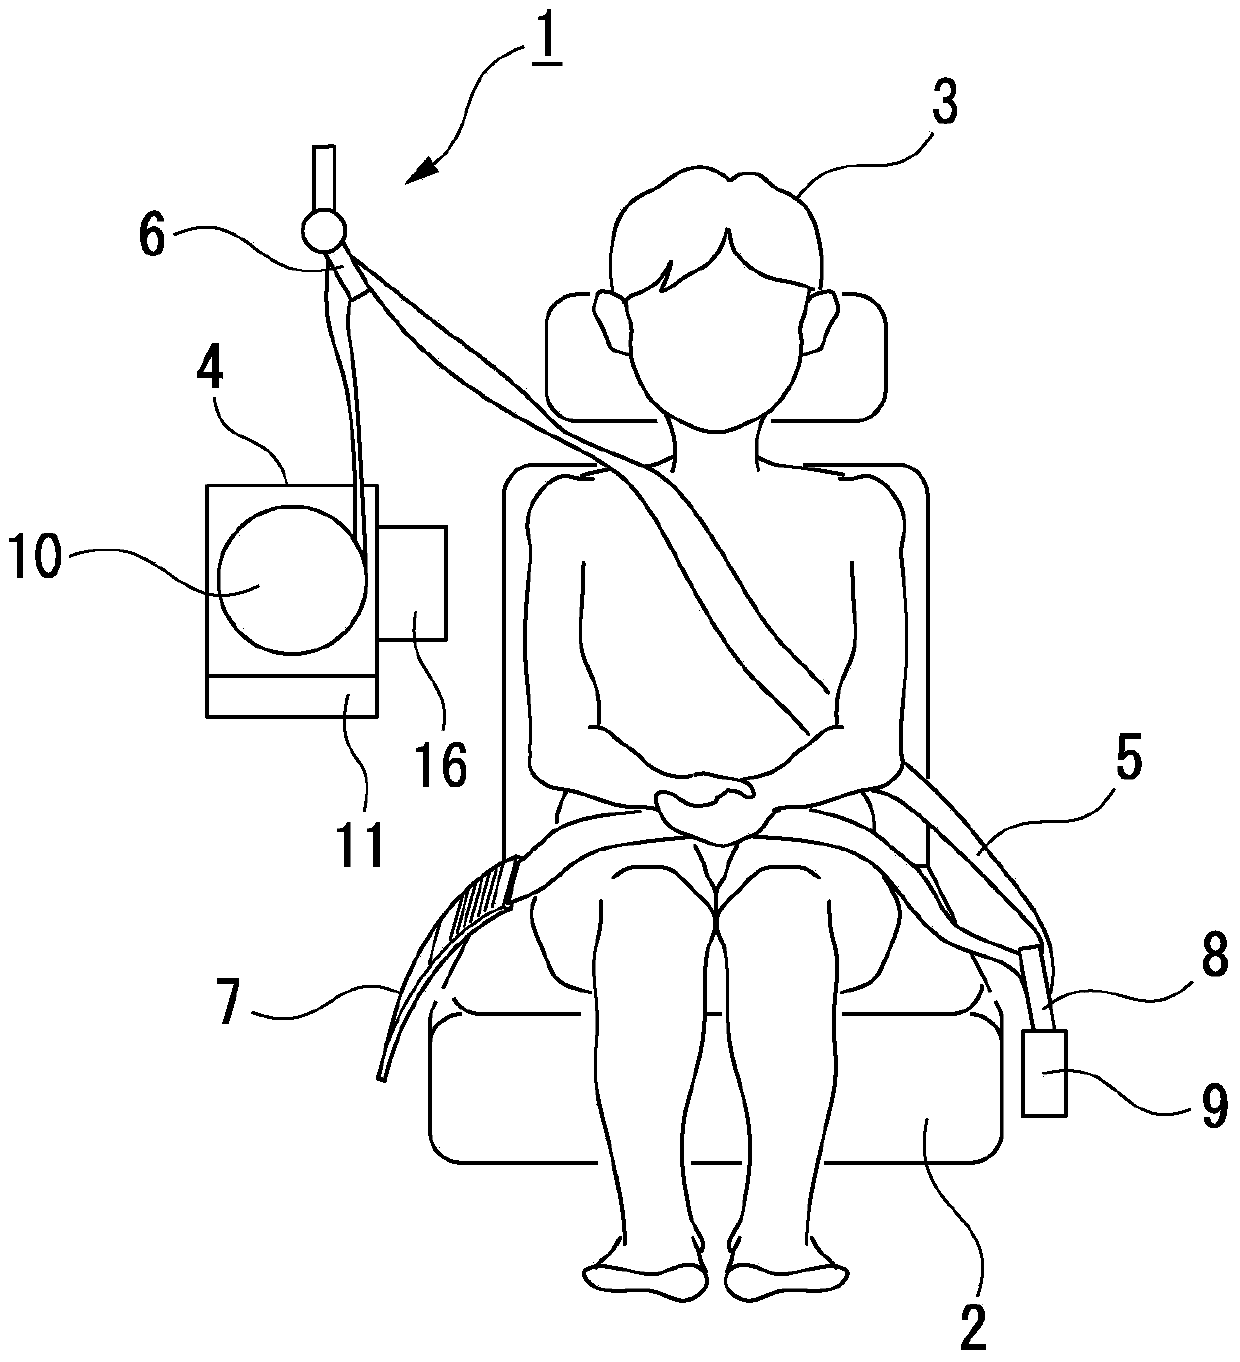 Seat belt apparatus